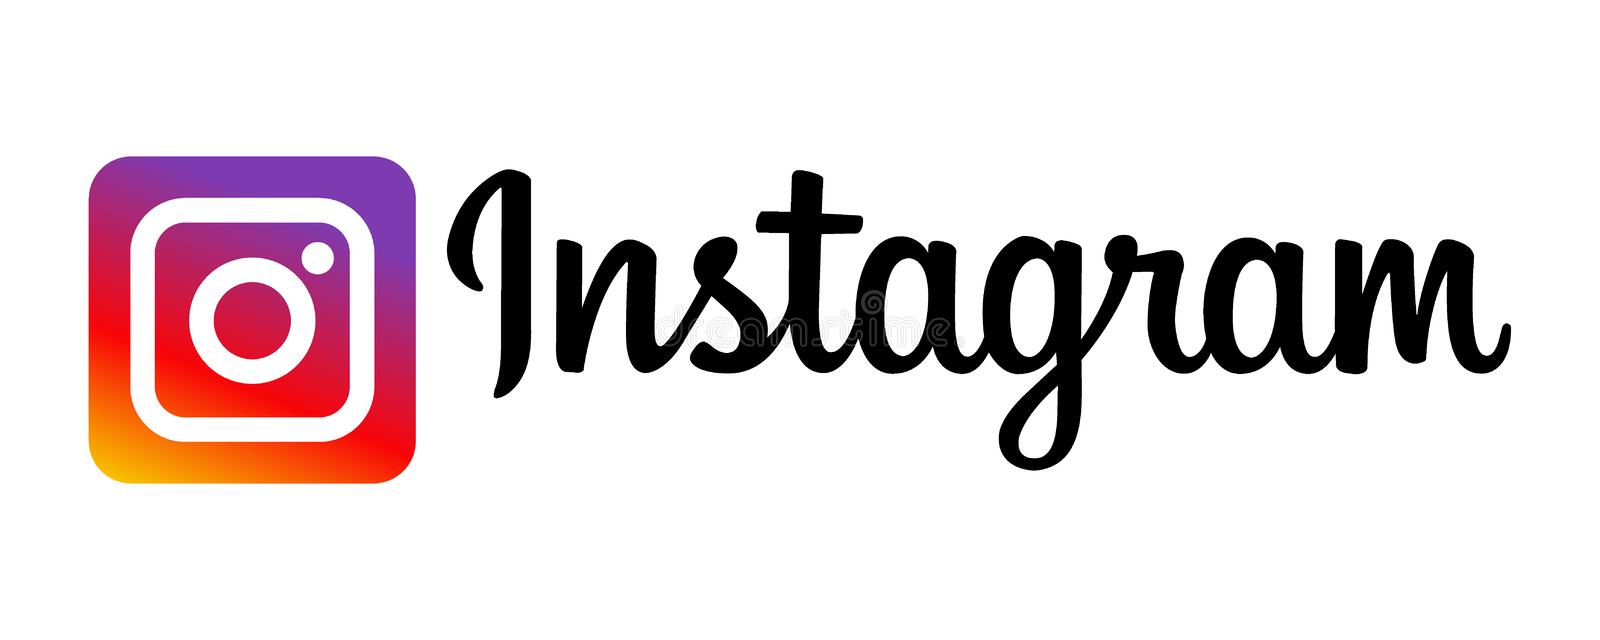 [ 10 Post ] 500 Instagram Likes